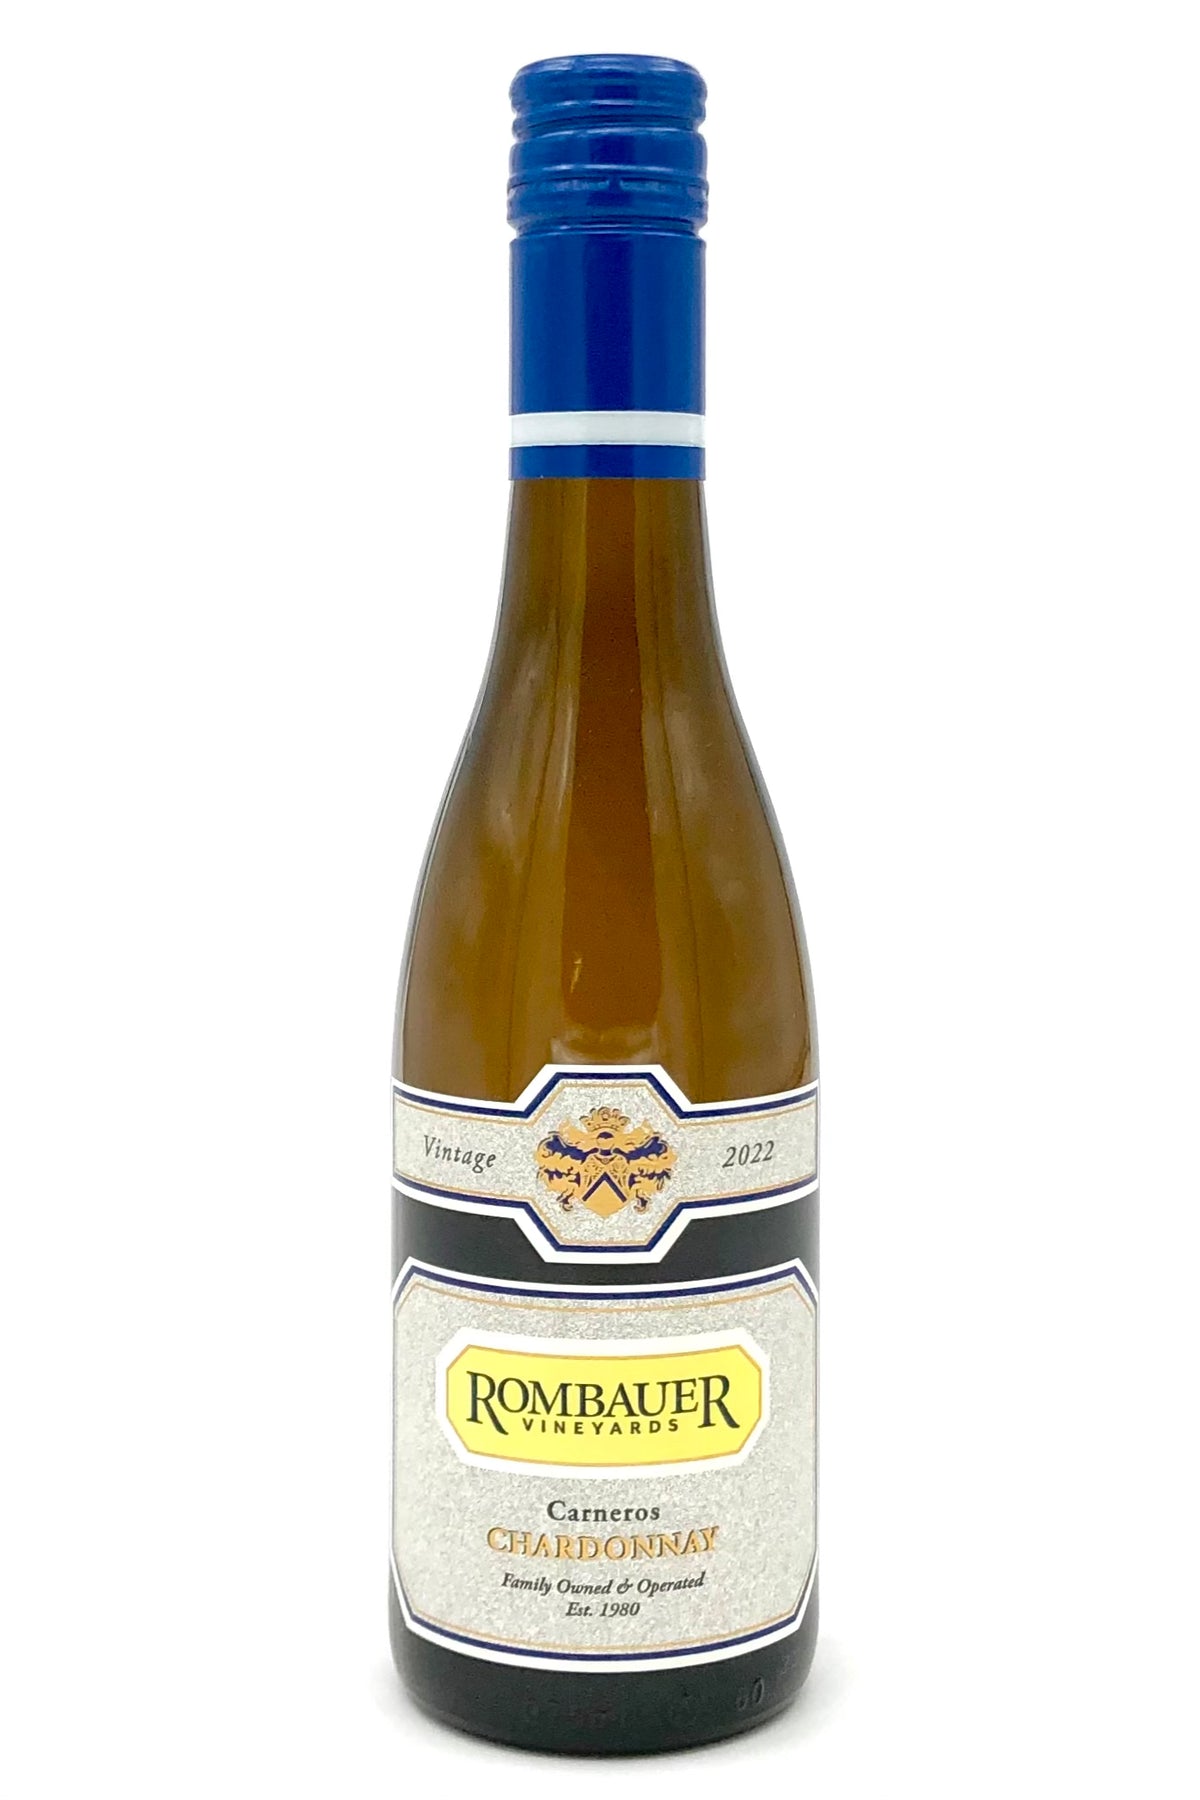 Rombauer 2022 Chardonnay 375 ml